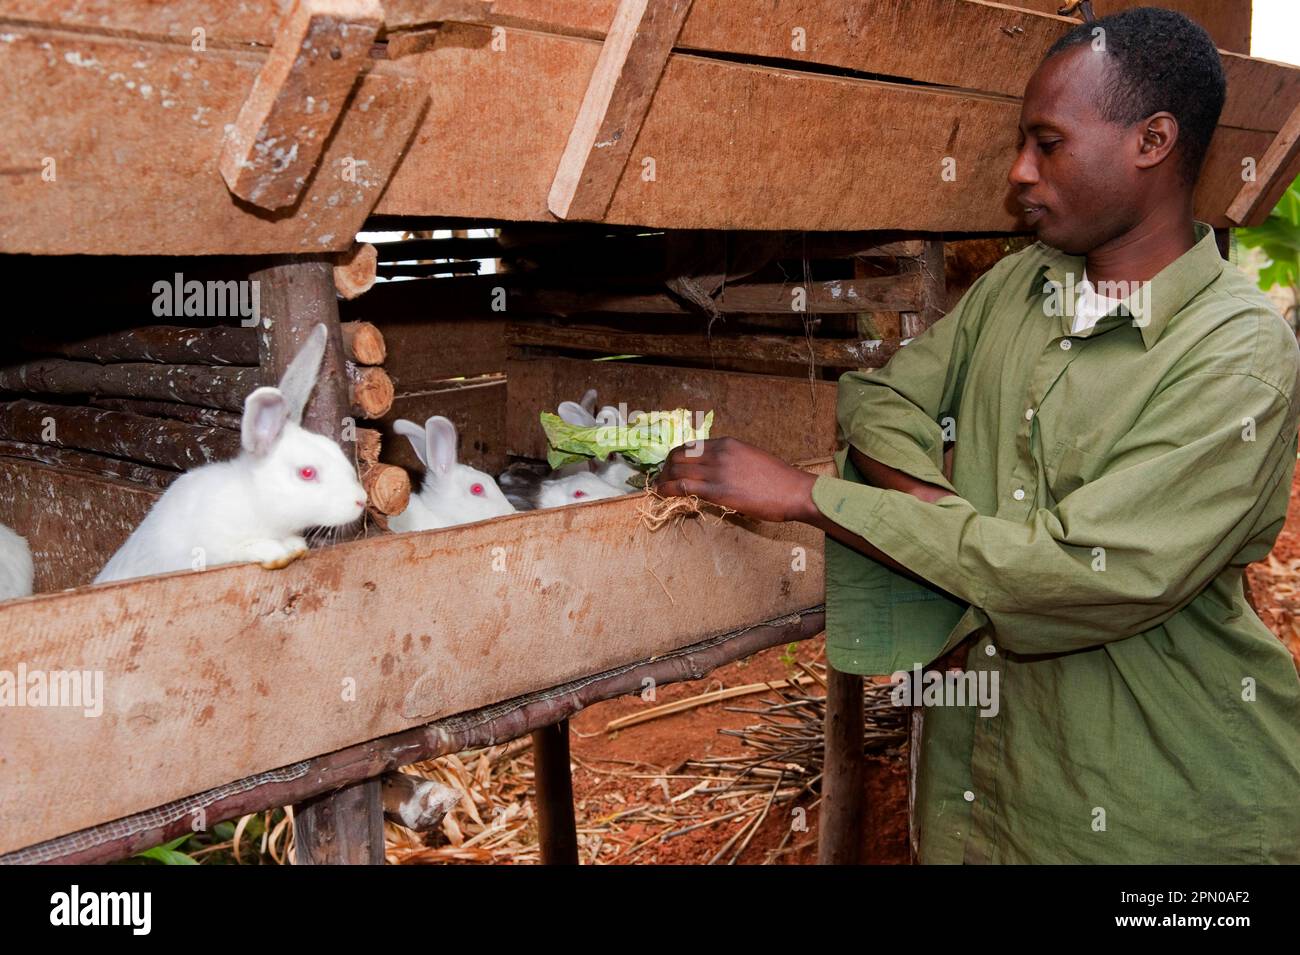 Rabbit breeding, man feeding albino rabbits in hutch, kept for meat, Rwanda Stock Photo